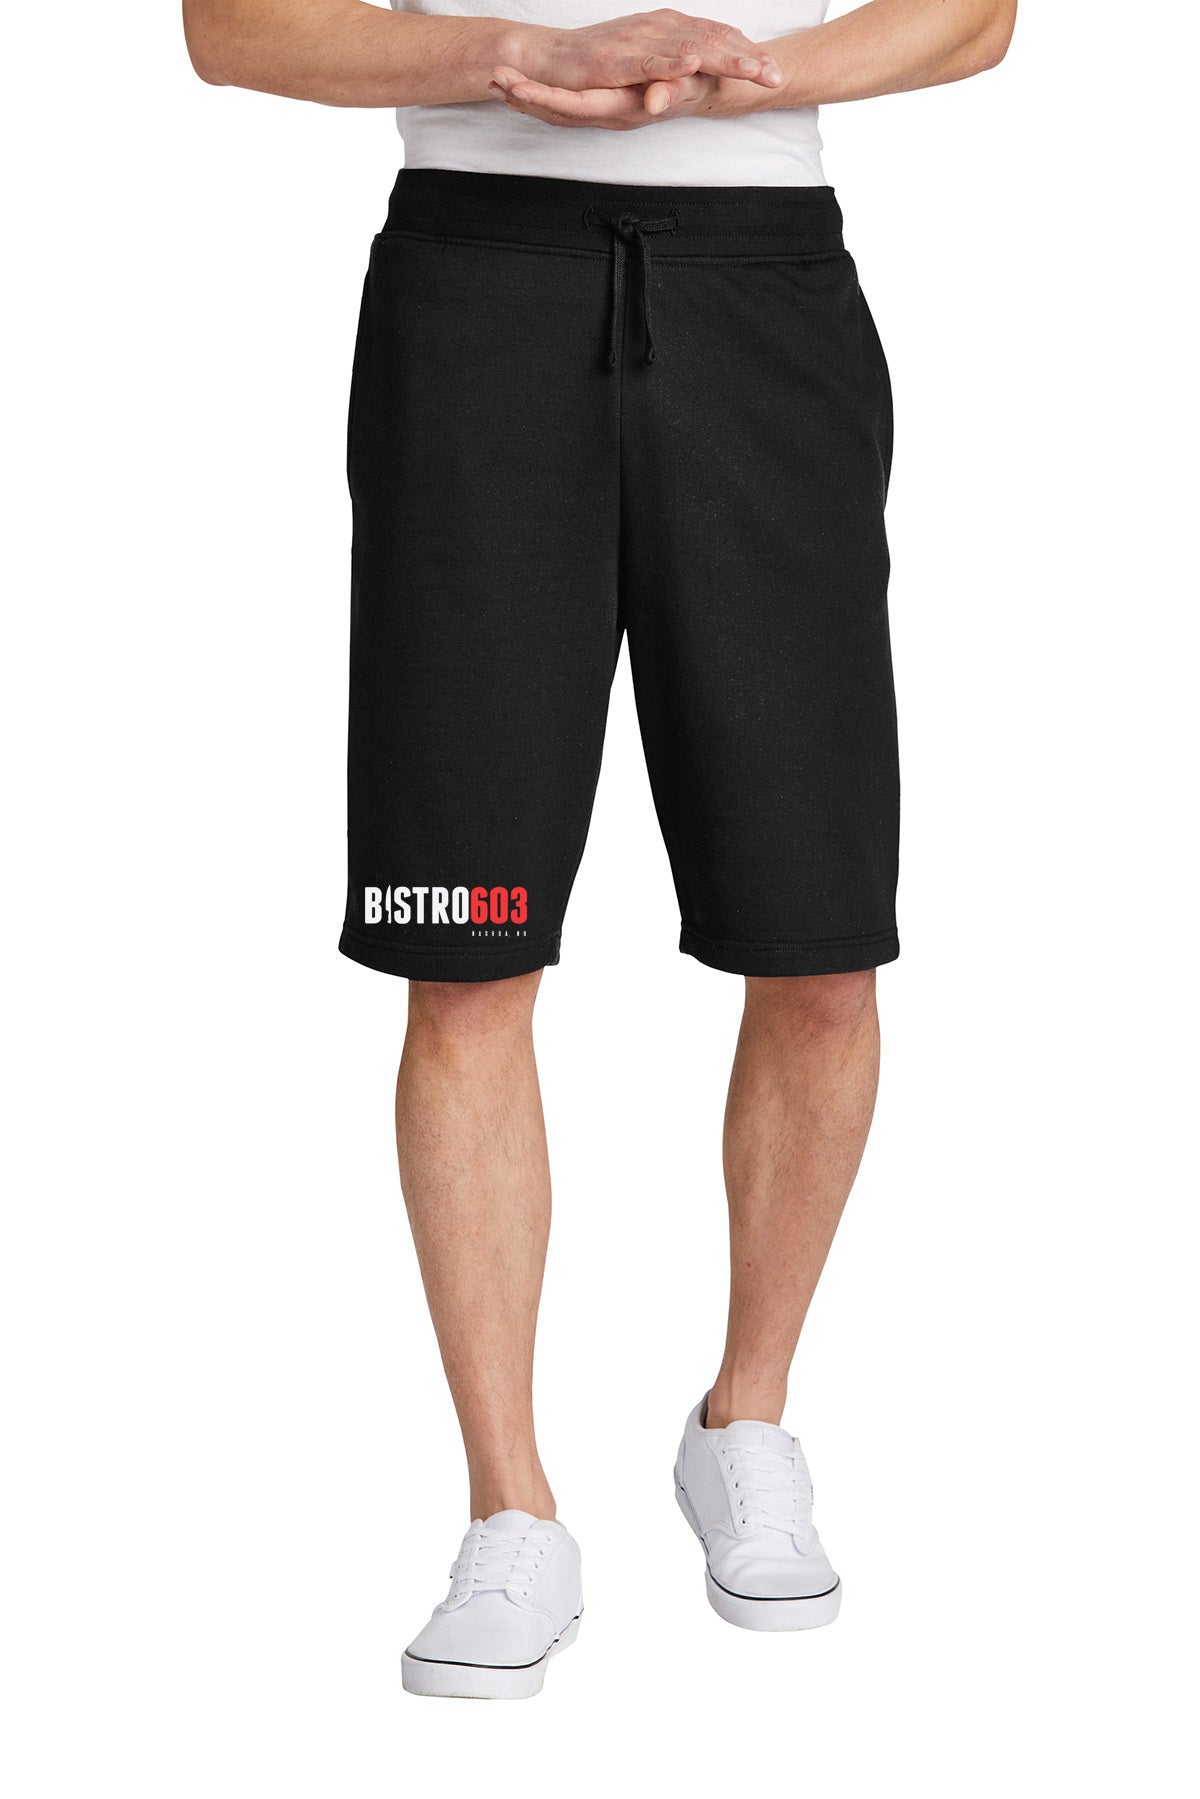 Bistro603 Mens Fleece Shorts